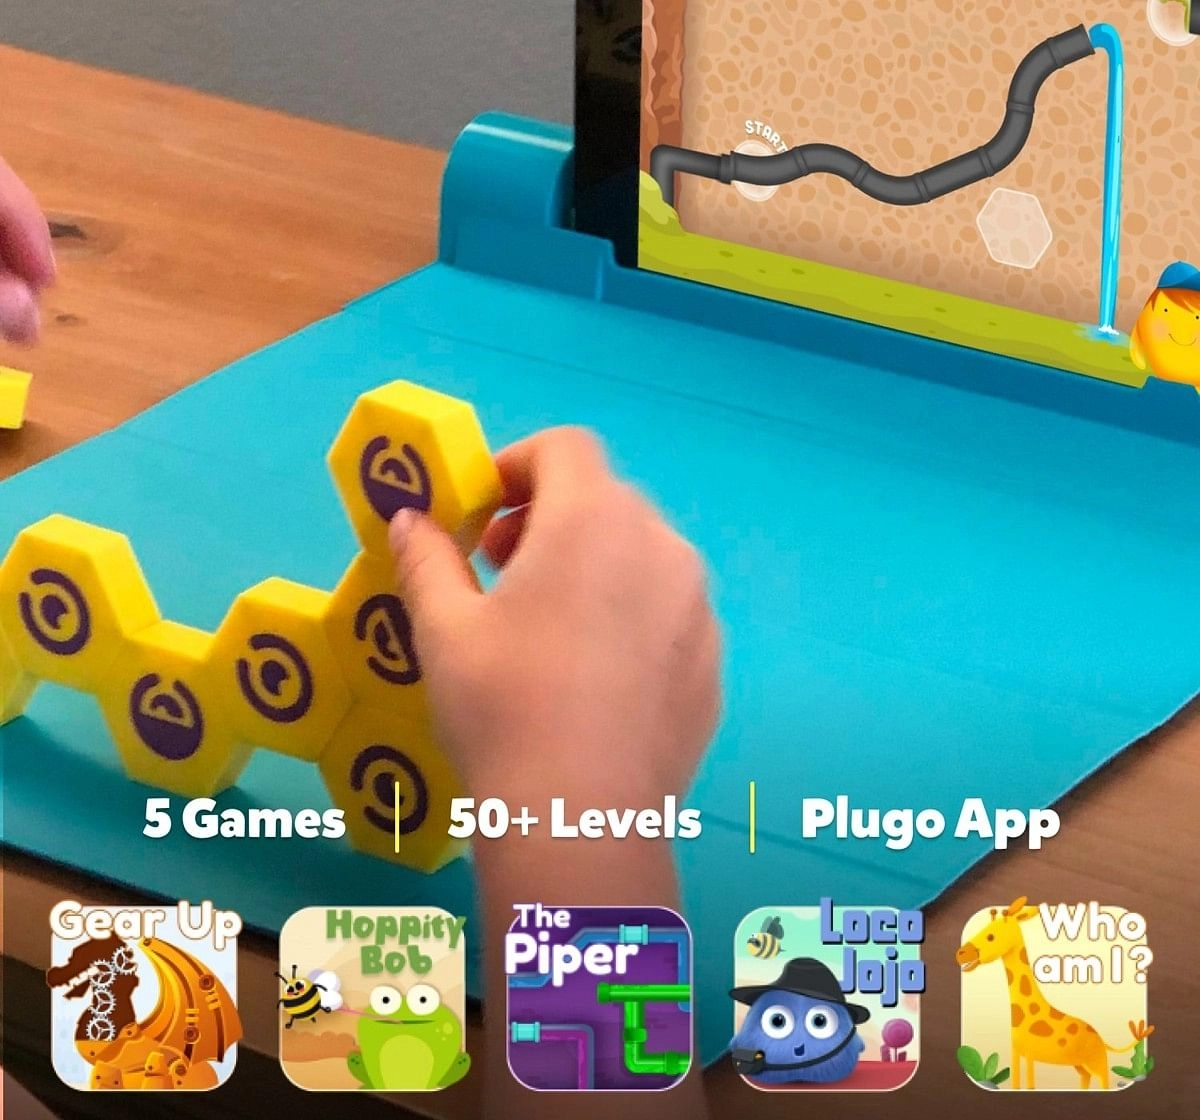 Playshifu Shifu Plugo Link - Construction Kit Games for Kids age 5Y+ 